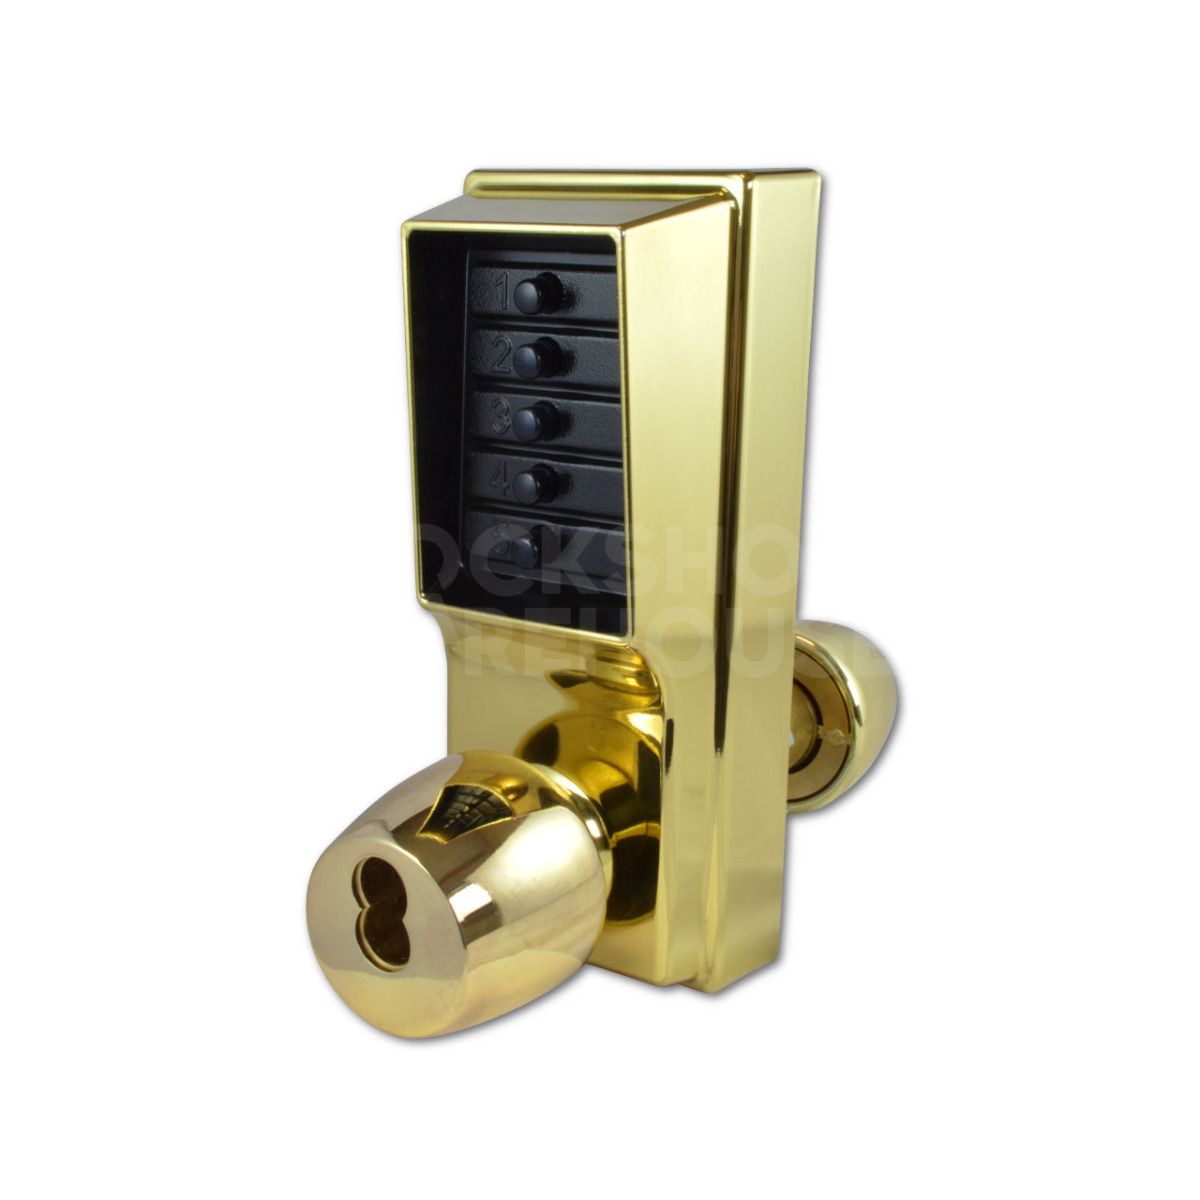 Kaba 1041B (1000-4) Mechanical Digital Combination Lock with Key Bypass and Passage Set Mode